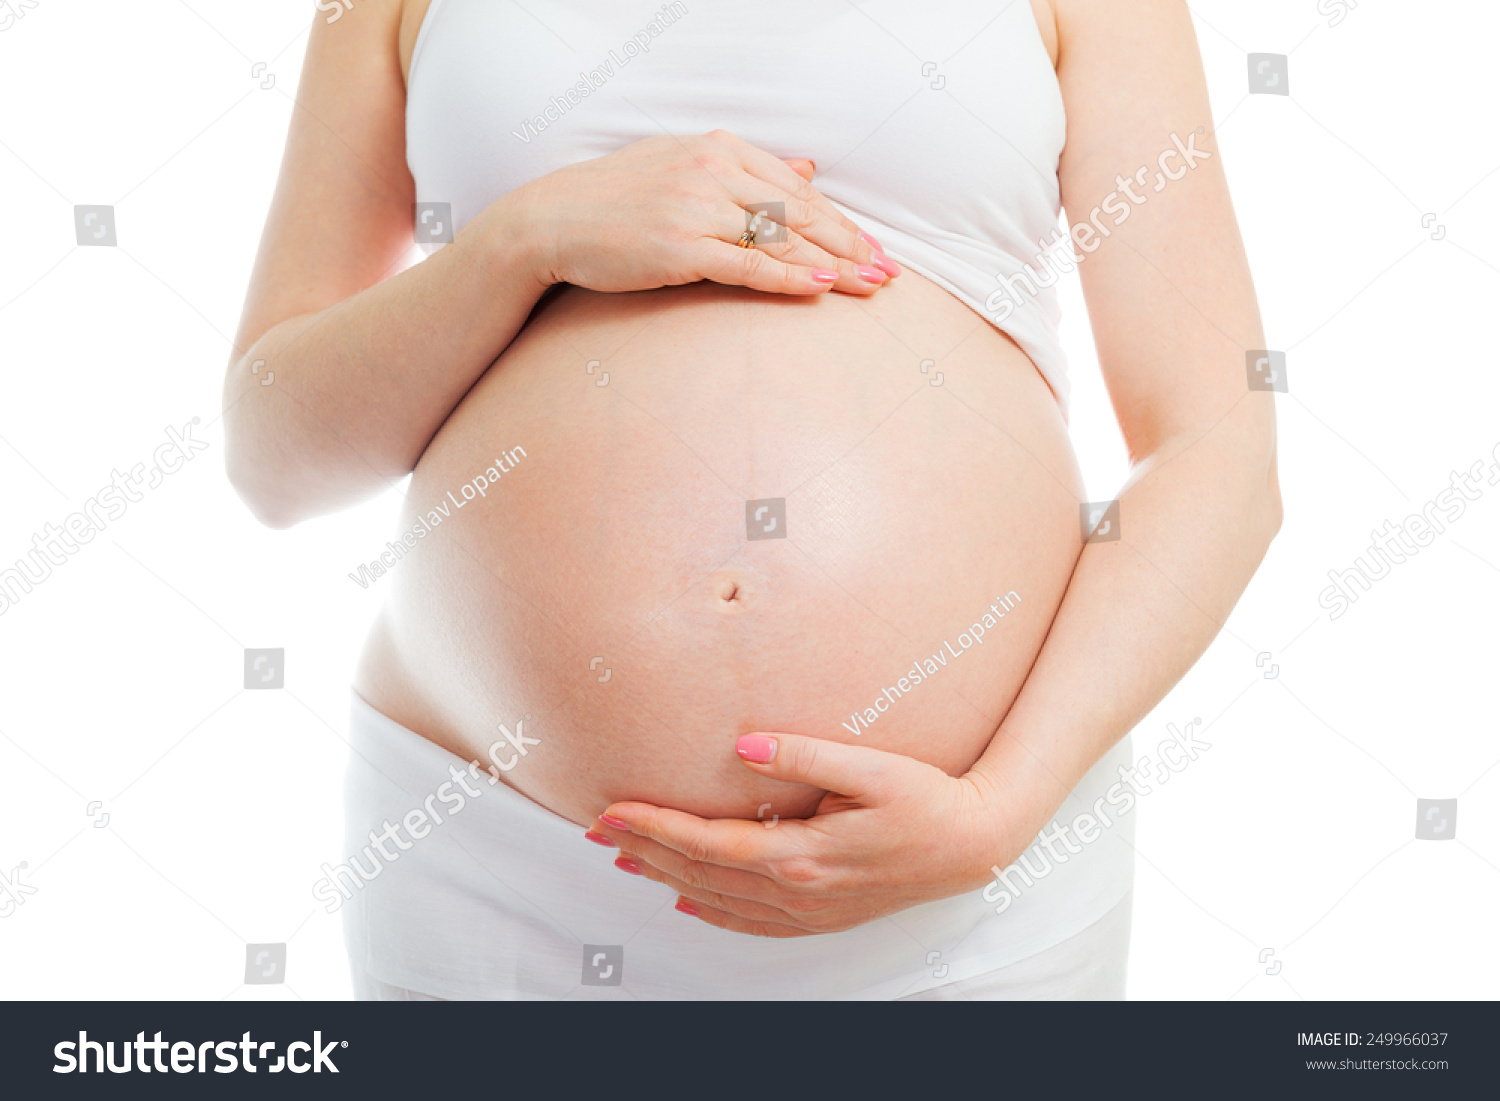 Big White Woman Pregnant Nude